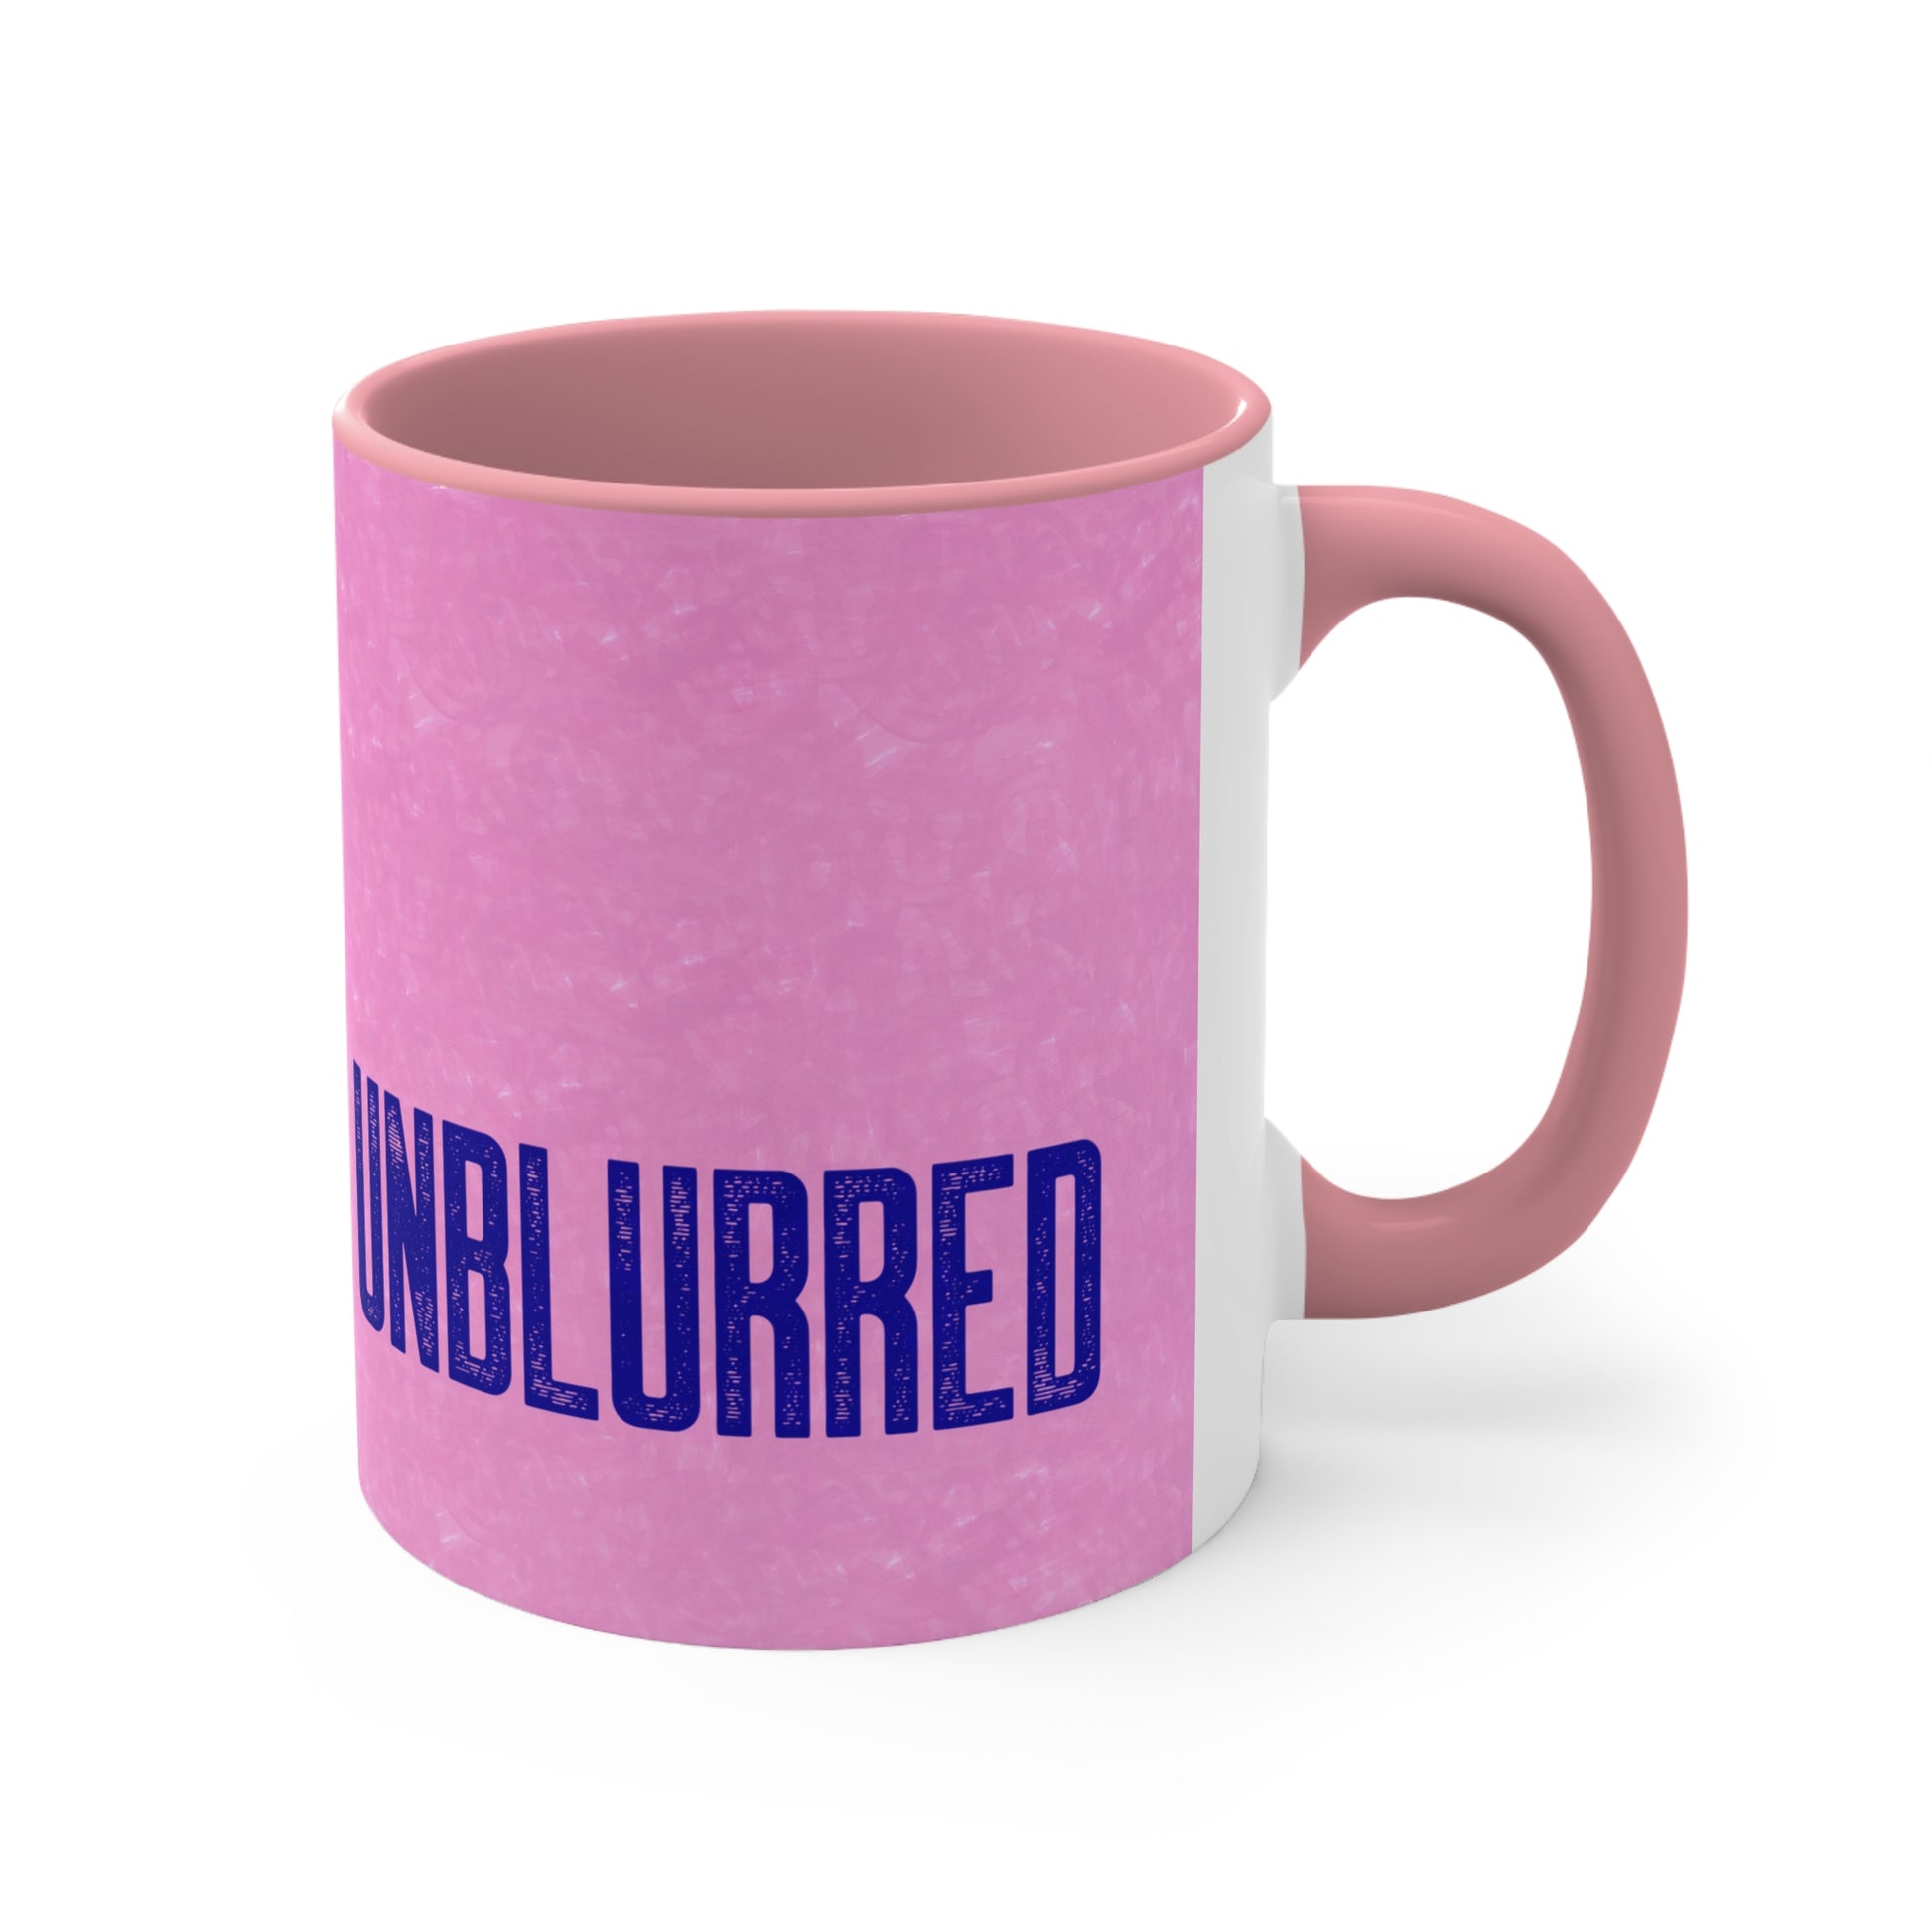 Be Unblurred : Leopard Coffee Mug,11oz